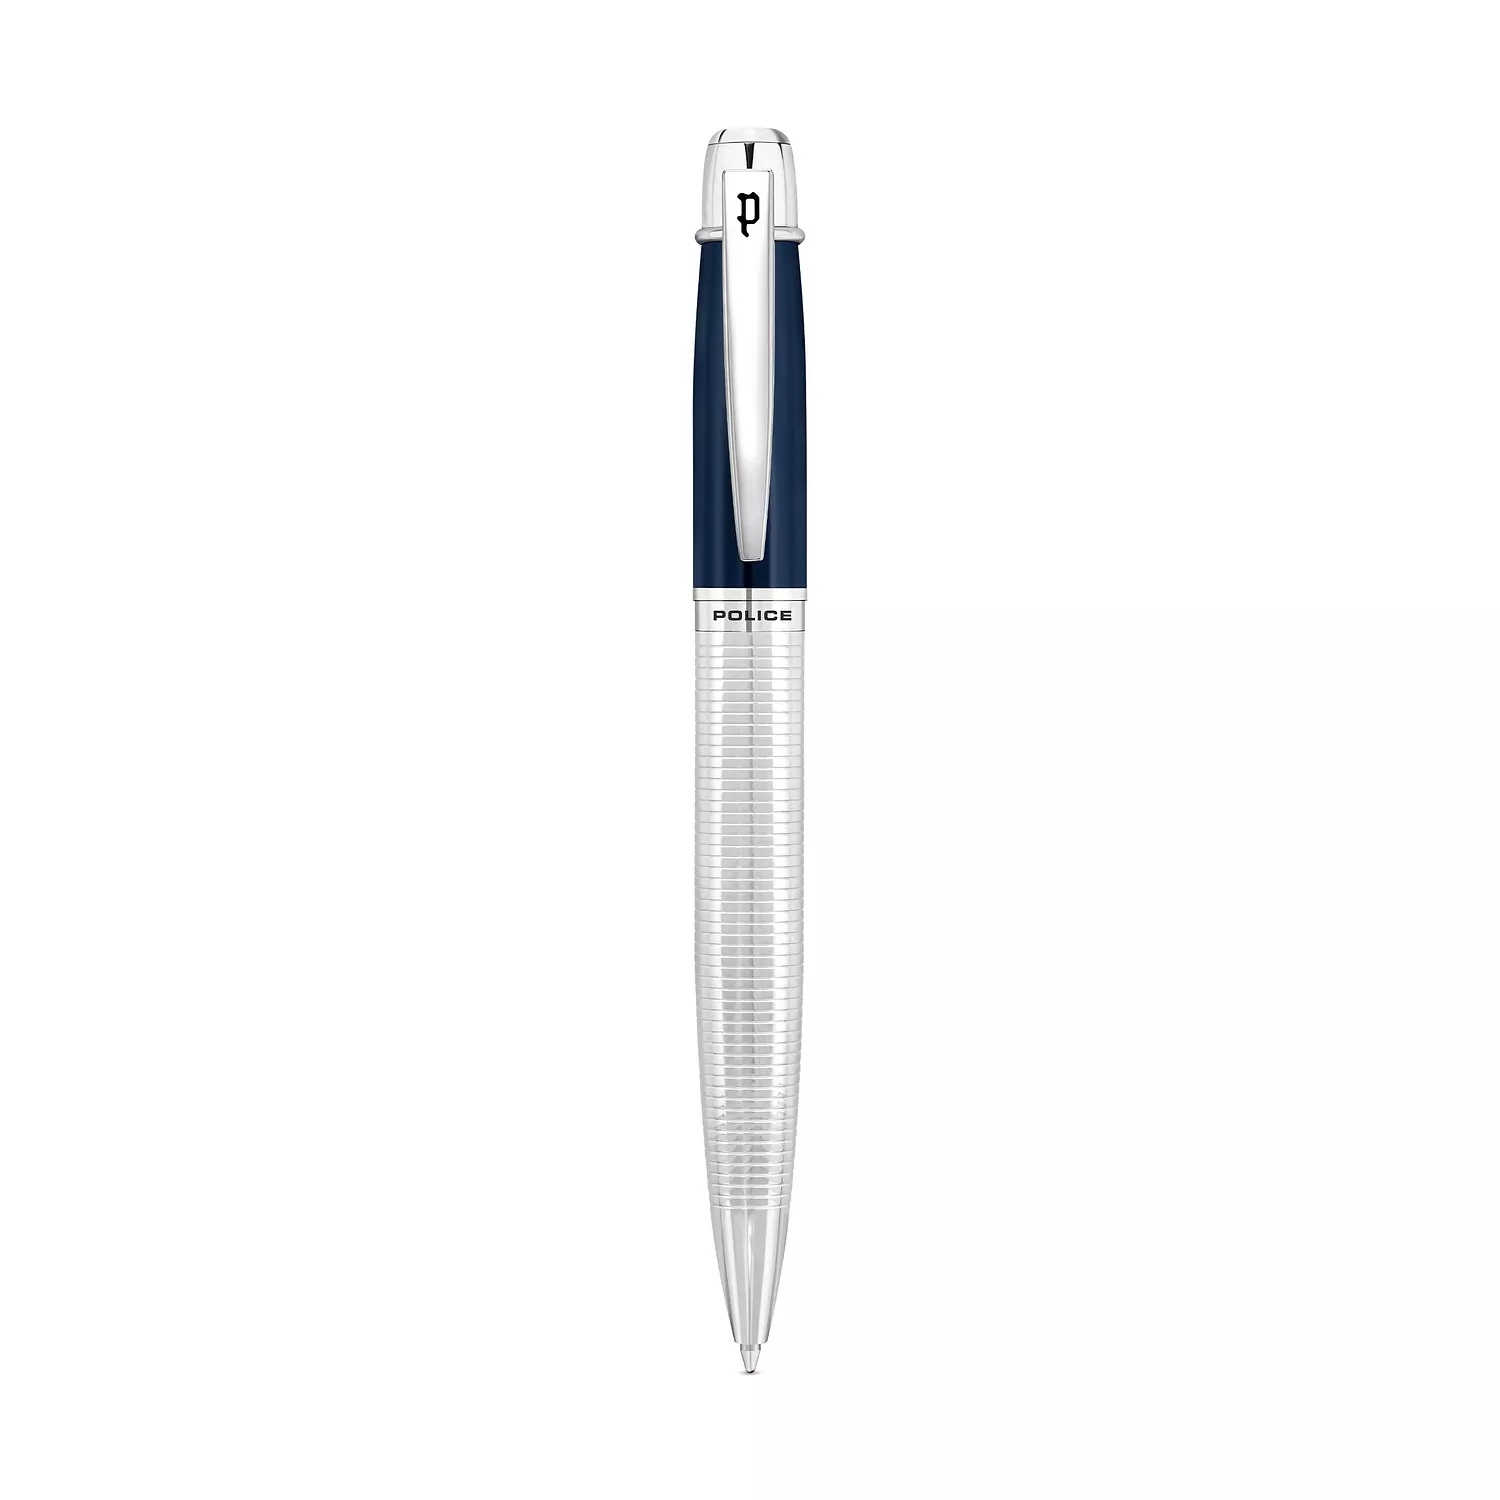 POLICE - Takota Pen For Men Blue & Silver Color - PERGR0001402 hover image